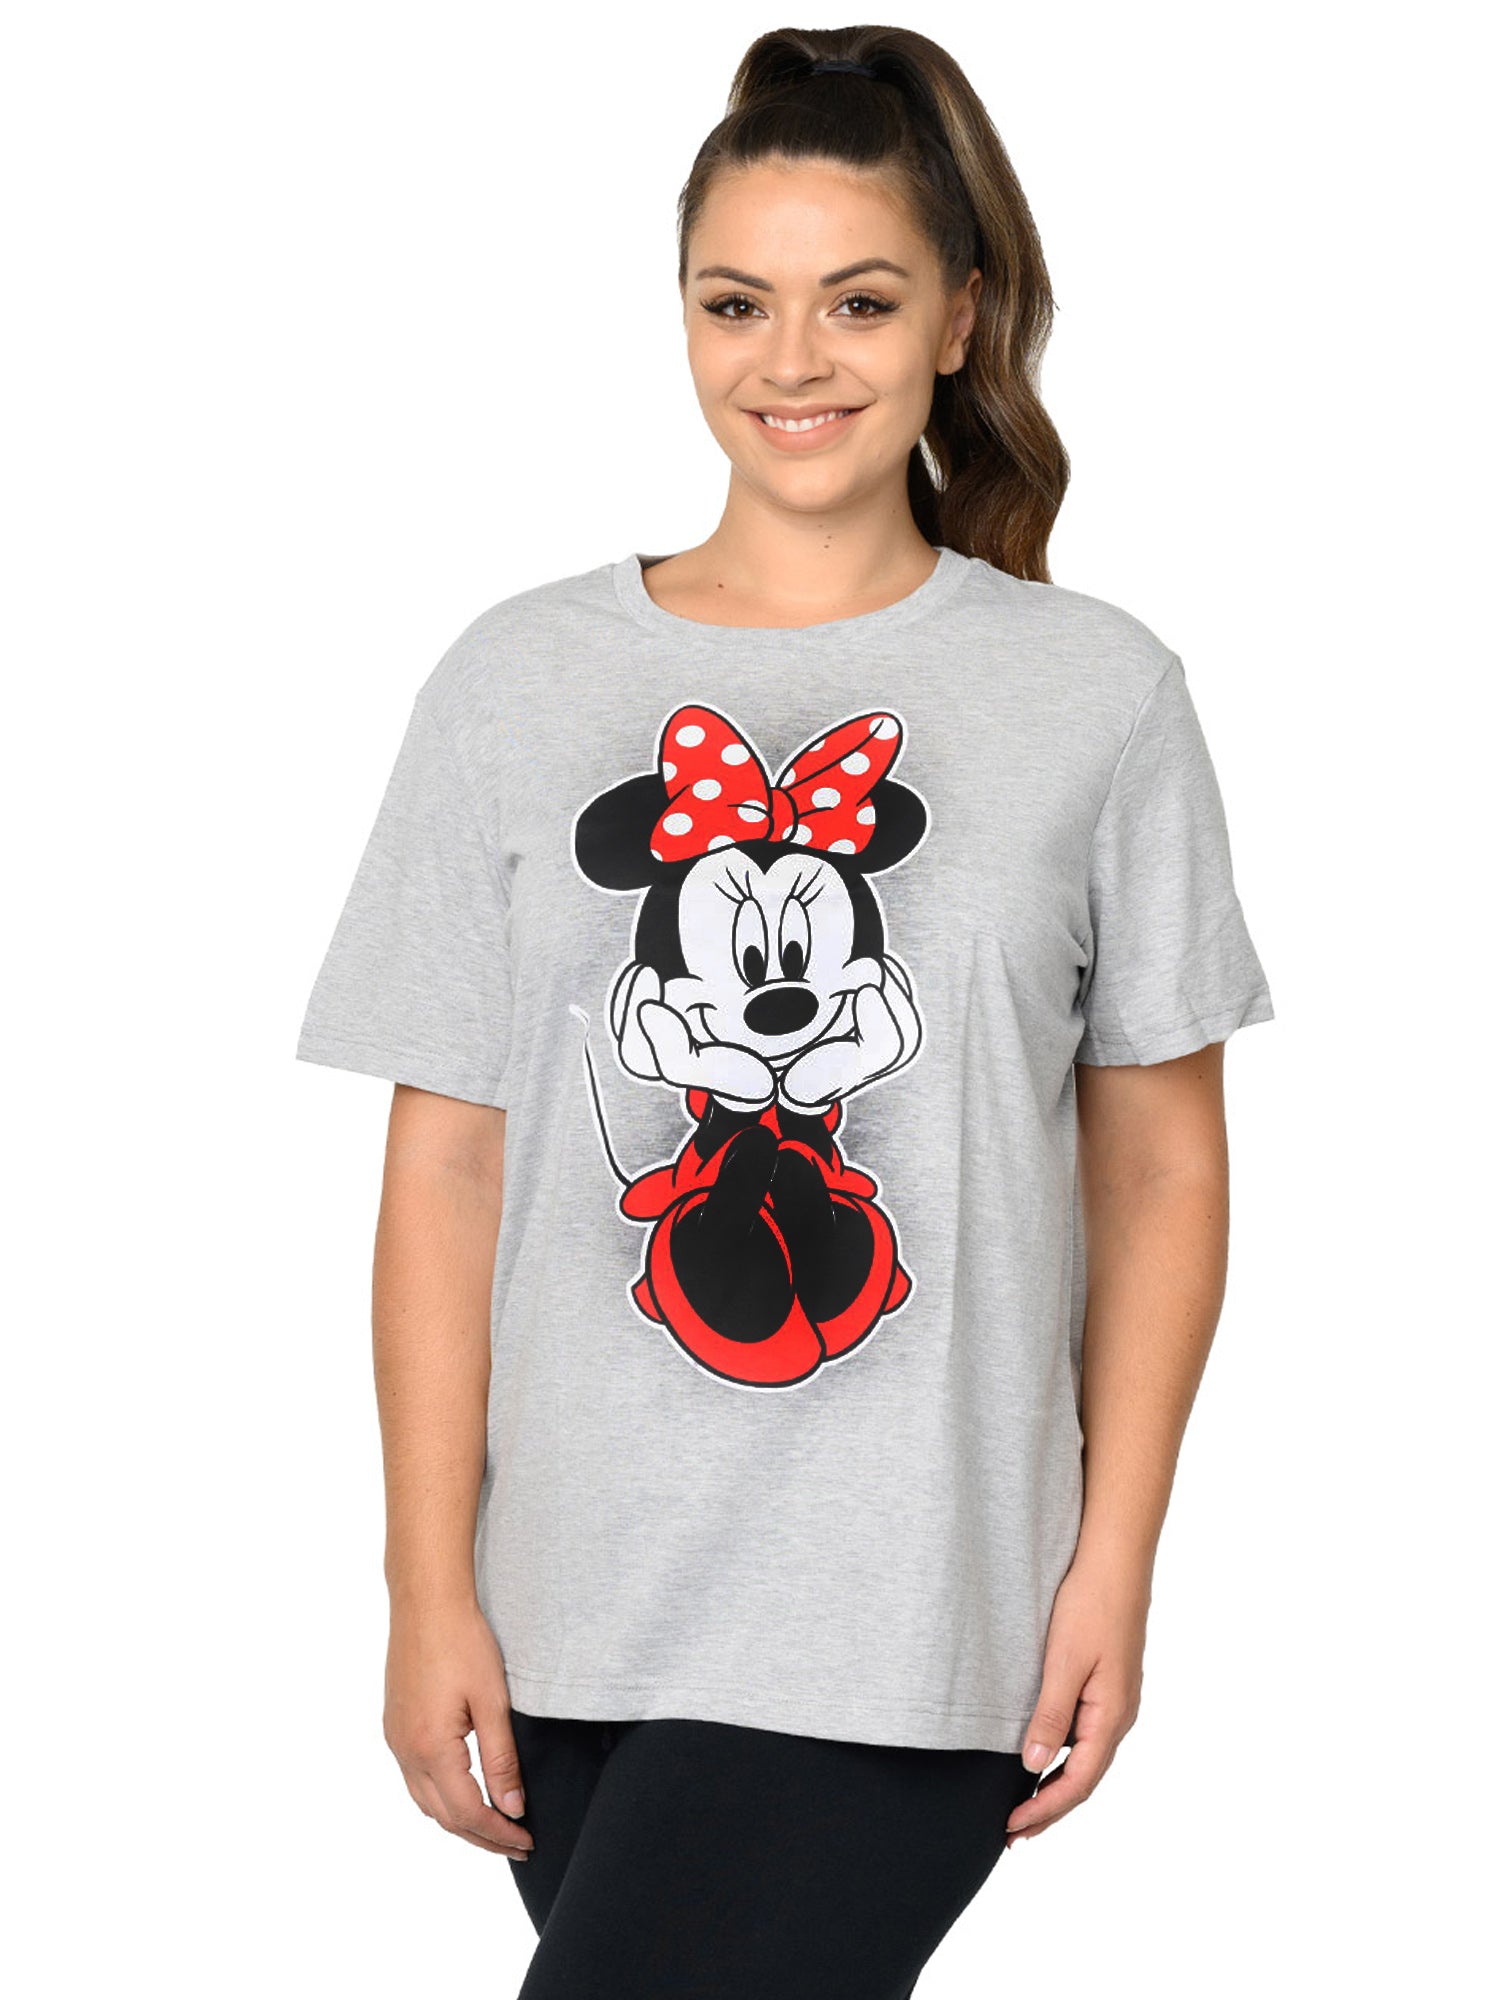 Women's Plus Size Minnie Mouse T-Shirt Disney Short Sleeve Tee Red Polka Dot